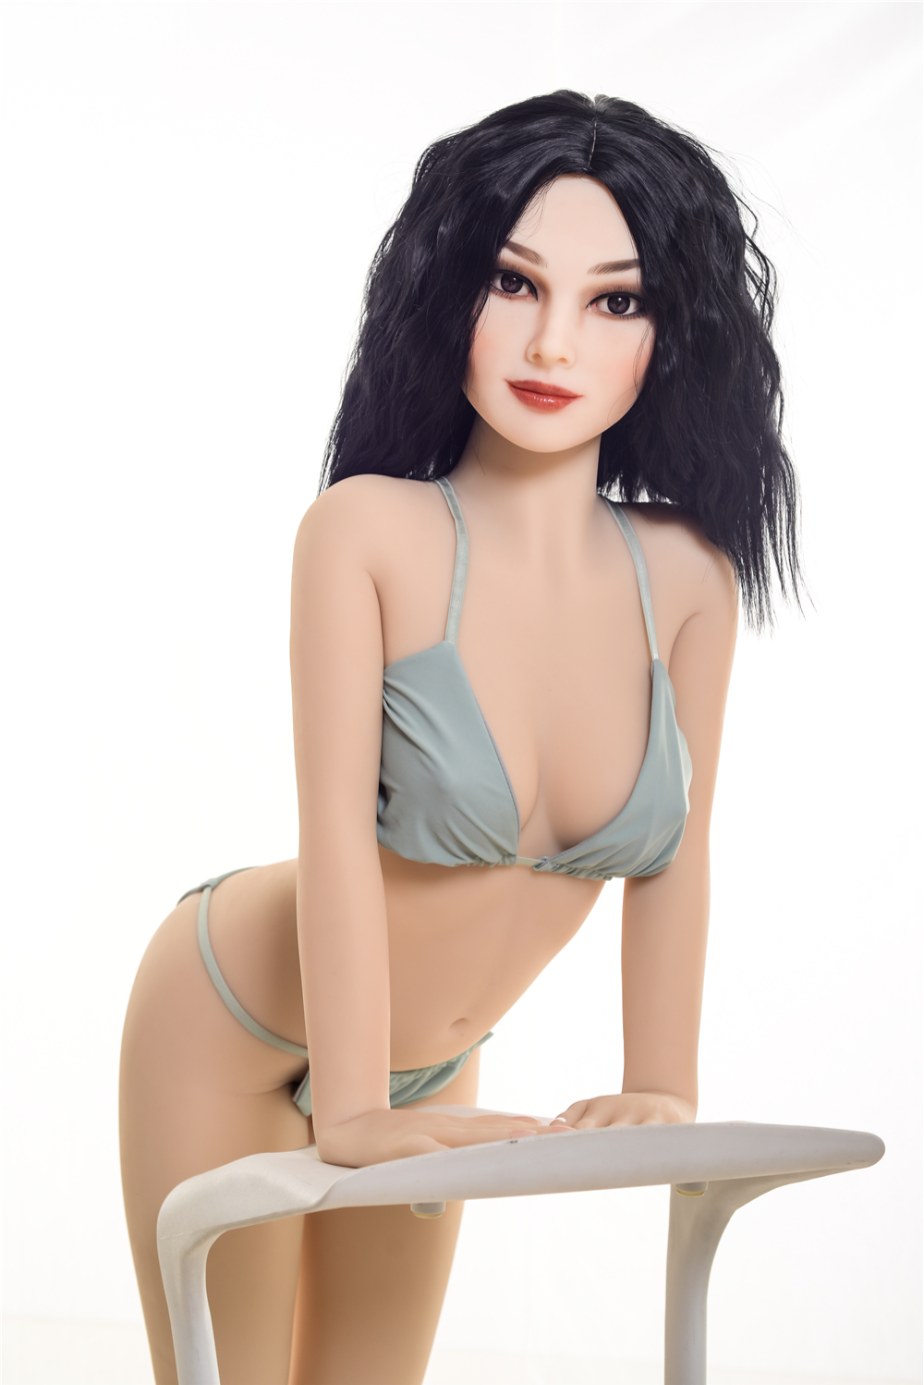 tamlyn 155cm black hair skinny flat chested tpe teen sex doll